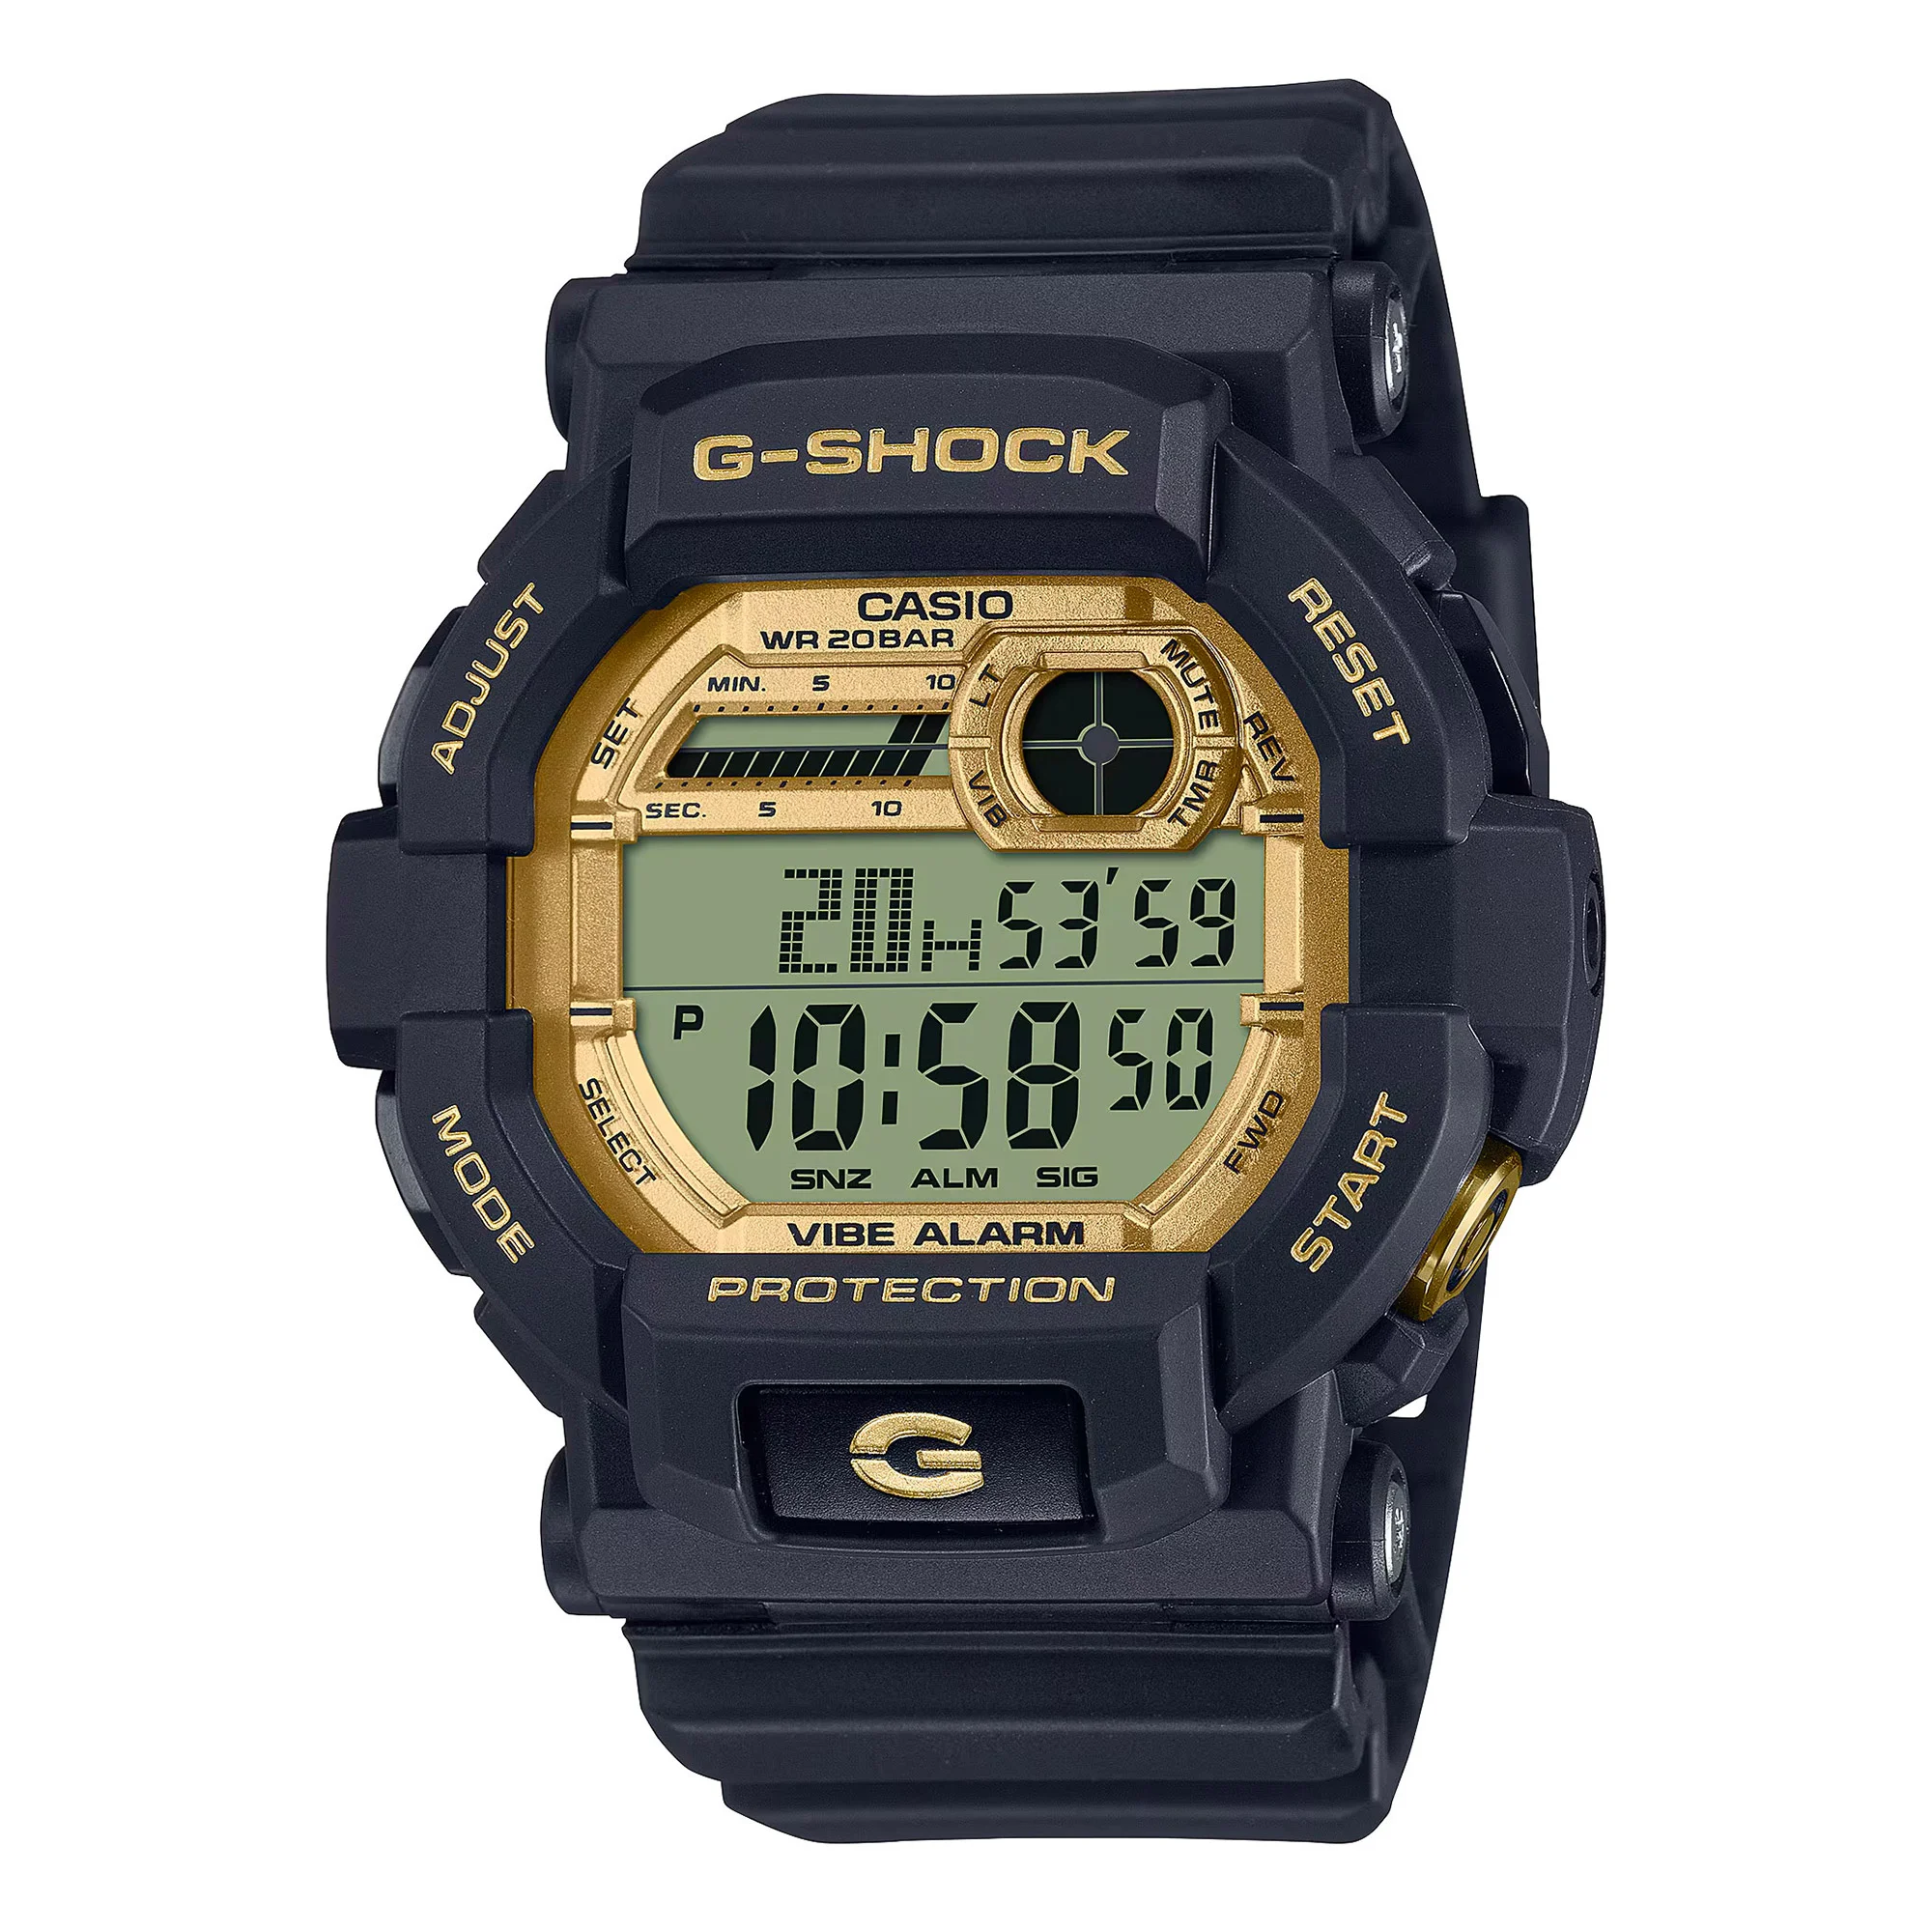 Watch CASIO G-Shock gd-350gb-1er